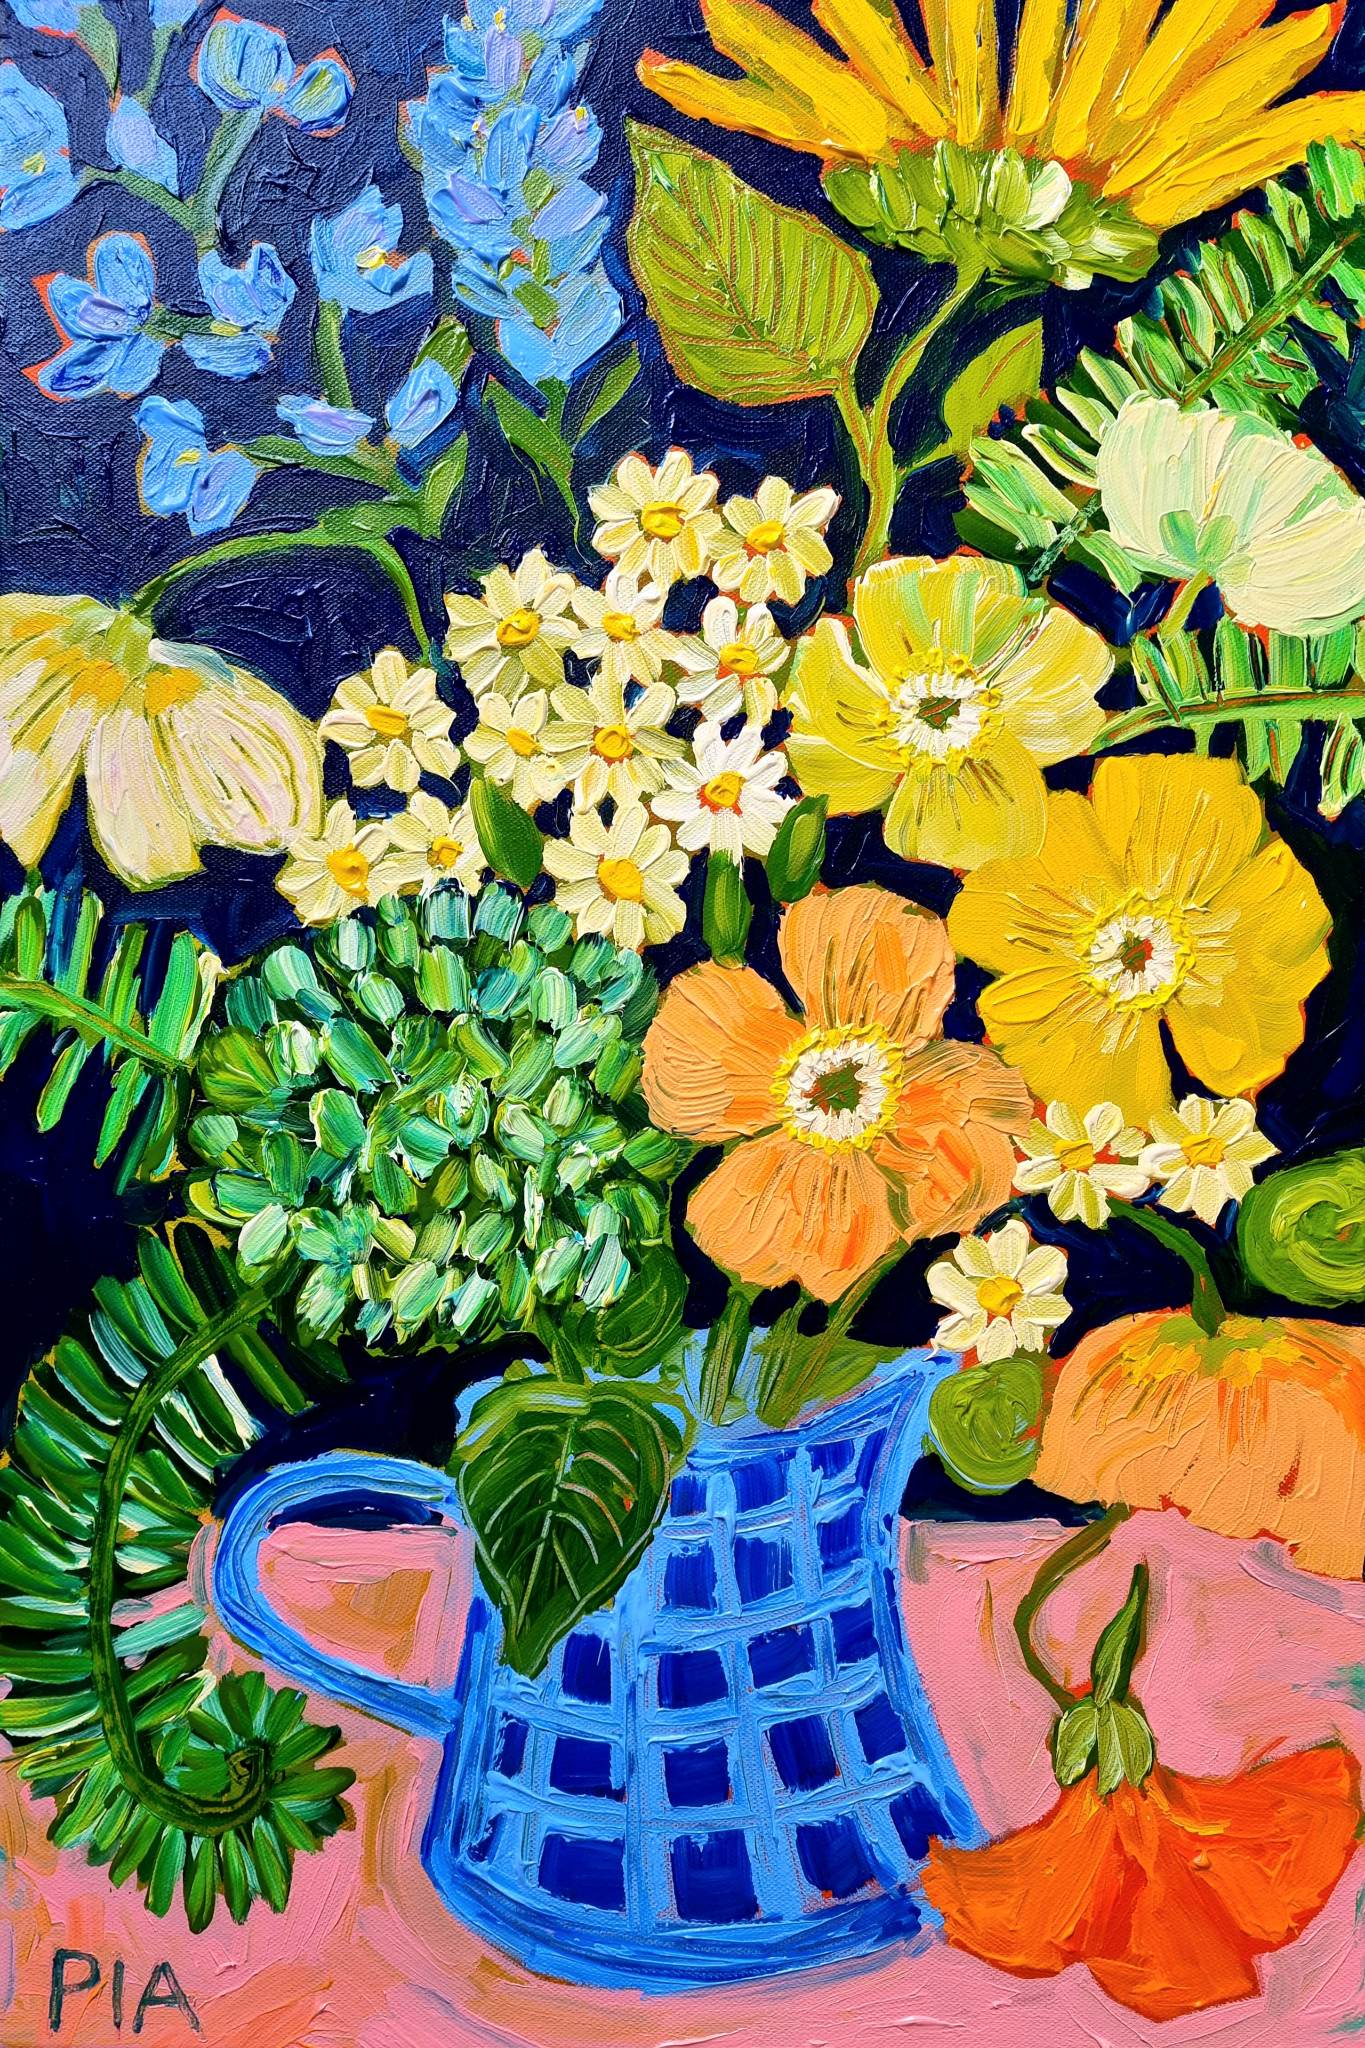 In The Winter Garden 1 - Blue Check Vase